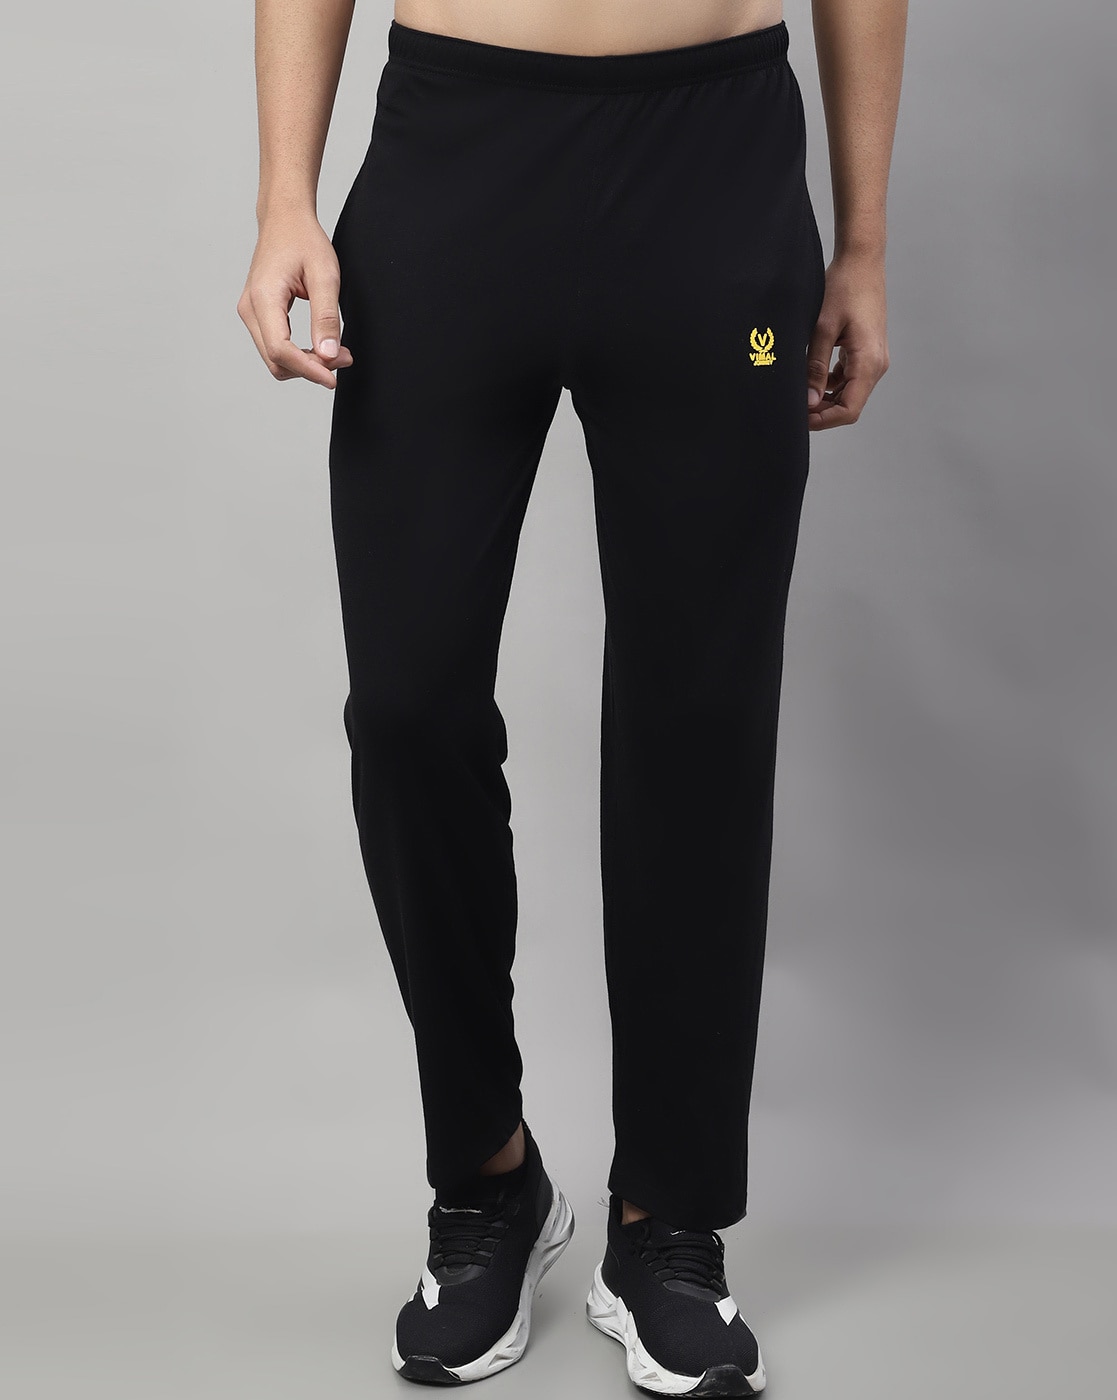 Buy adidas Women's Basketball Pants, Grey, XXX-Large at Amazon.in